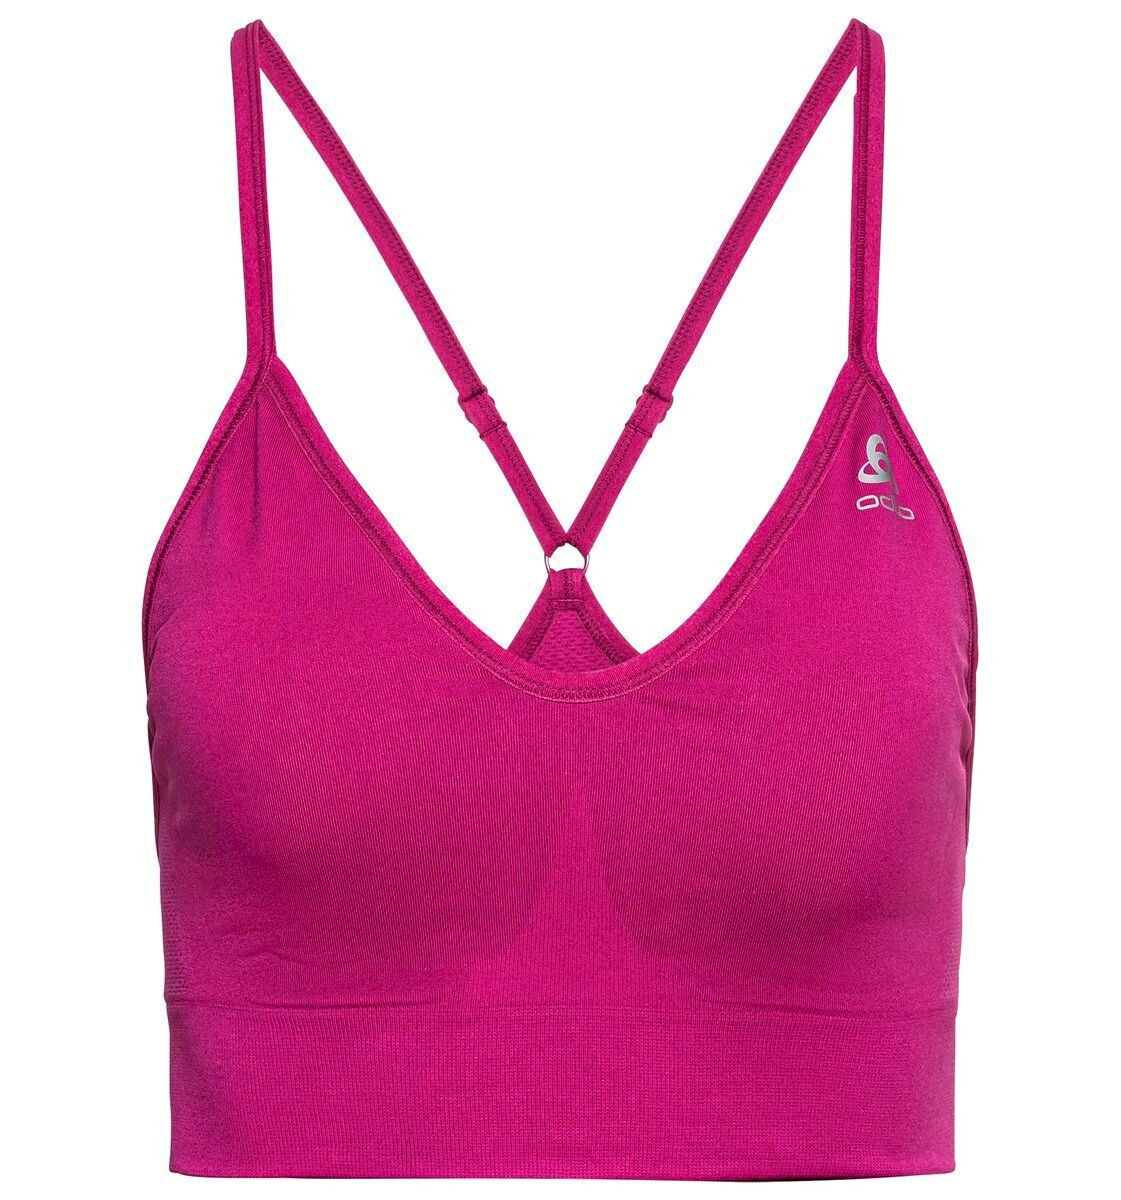 Odlo Padded Seamless Soft 2.0 - Sports bra - Women's